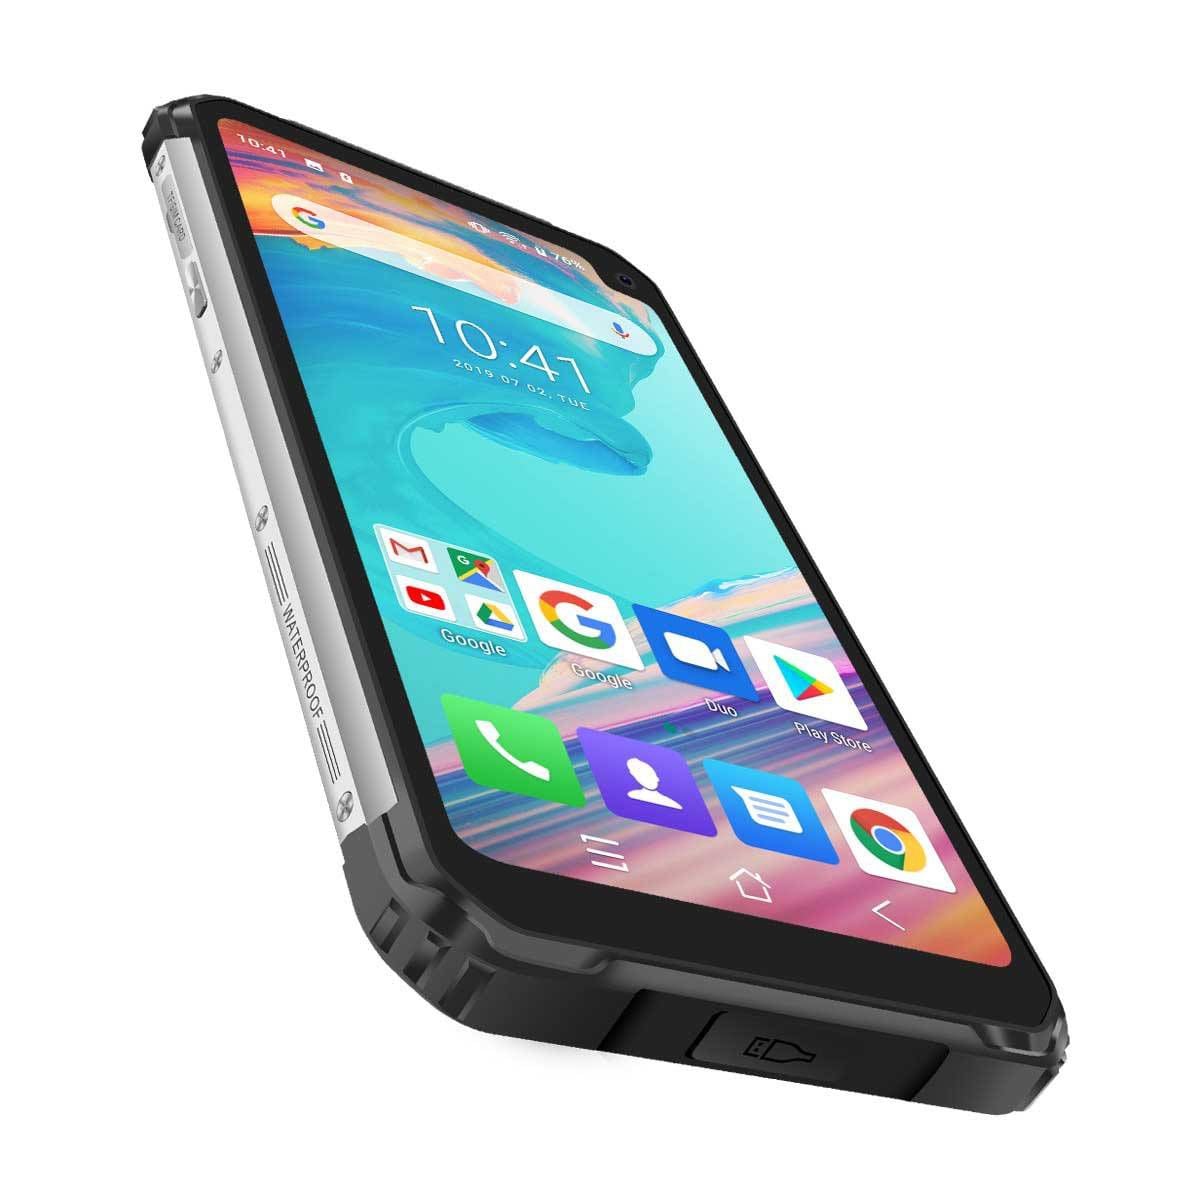 cortesía Oxidado grieta Samsung, LG, Blackview: siete celulares que resisten caídas y golpes